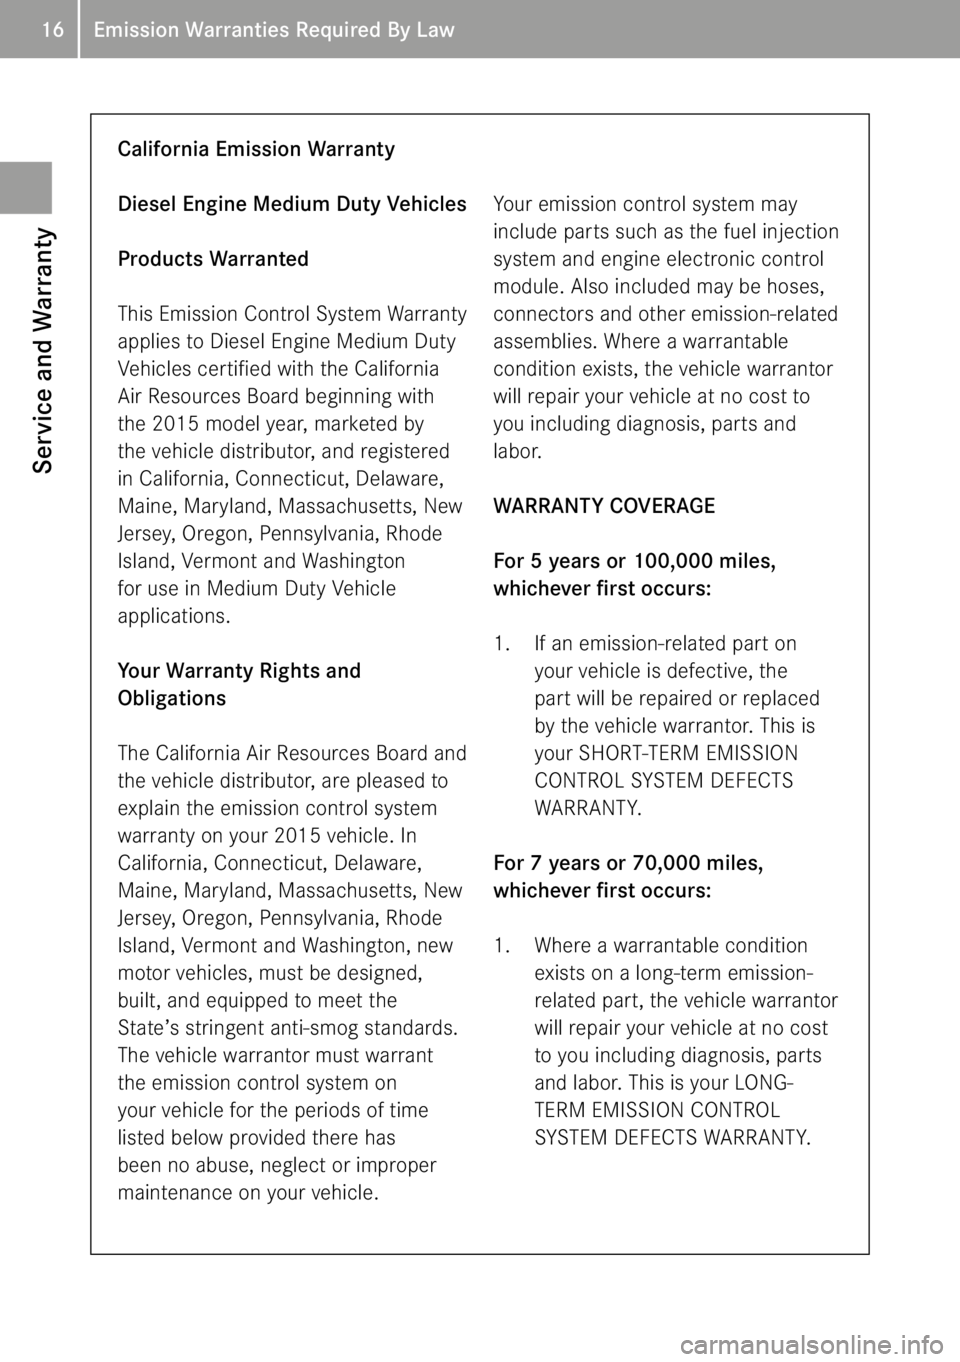 MERCEDES-BENZ SPRINTER 2015  MY15 Service and Warranty Information 16Emission Warranties Required By Law
California Emission Warranty
Diesel Engine Medium Duty Vehicles
Products Warranted
This Emission Control System Warranty 
applies to Diesel Engine Medium Duty 
Ve